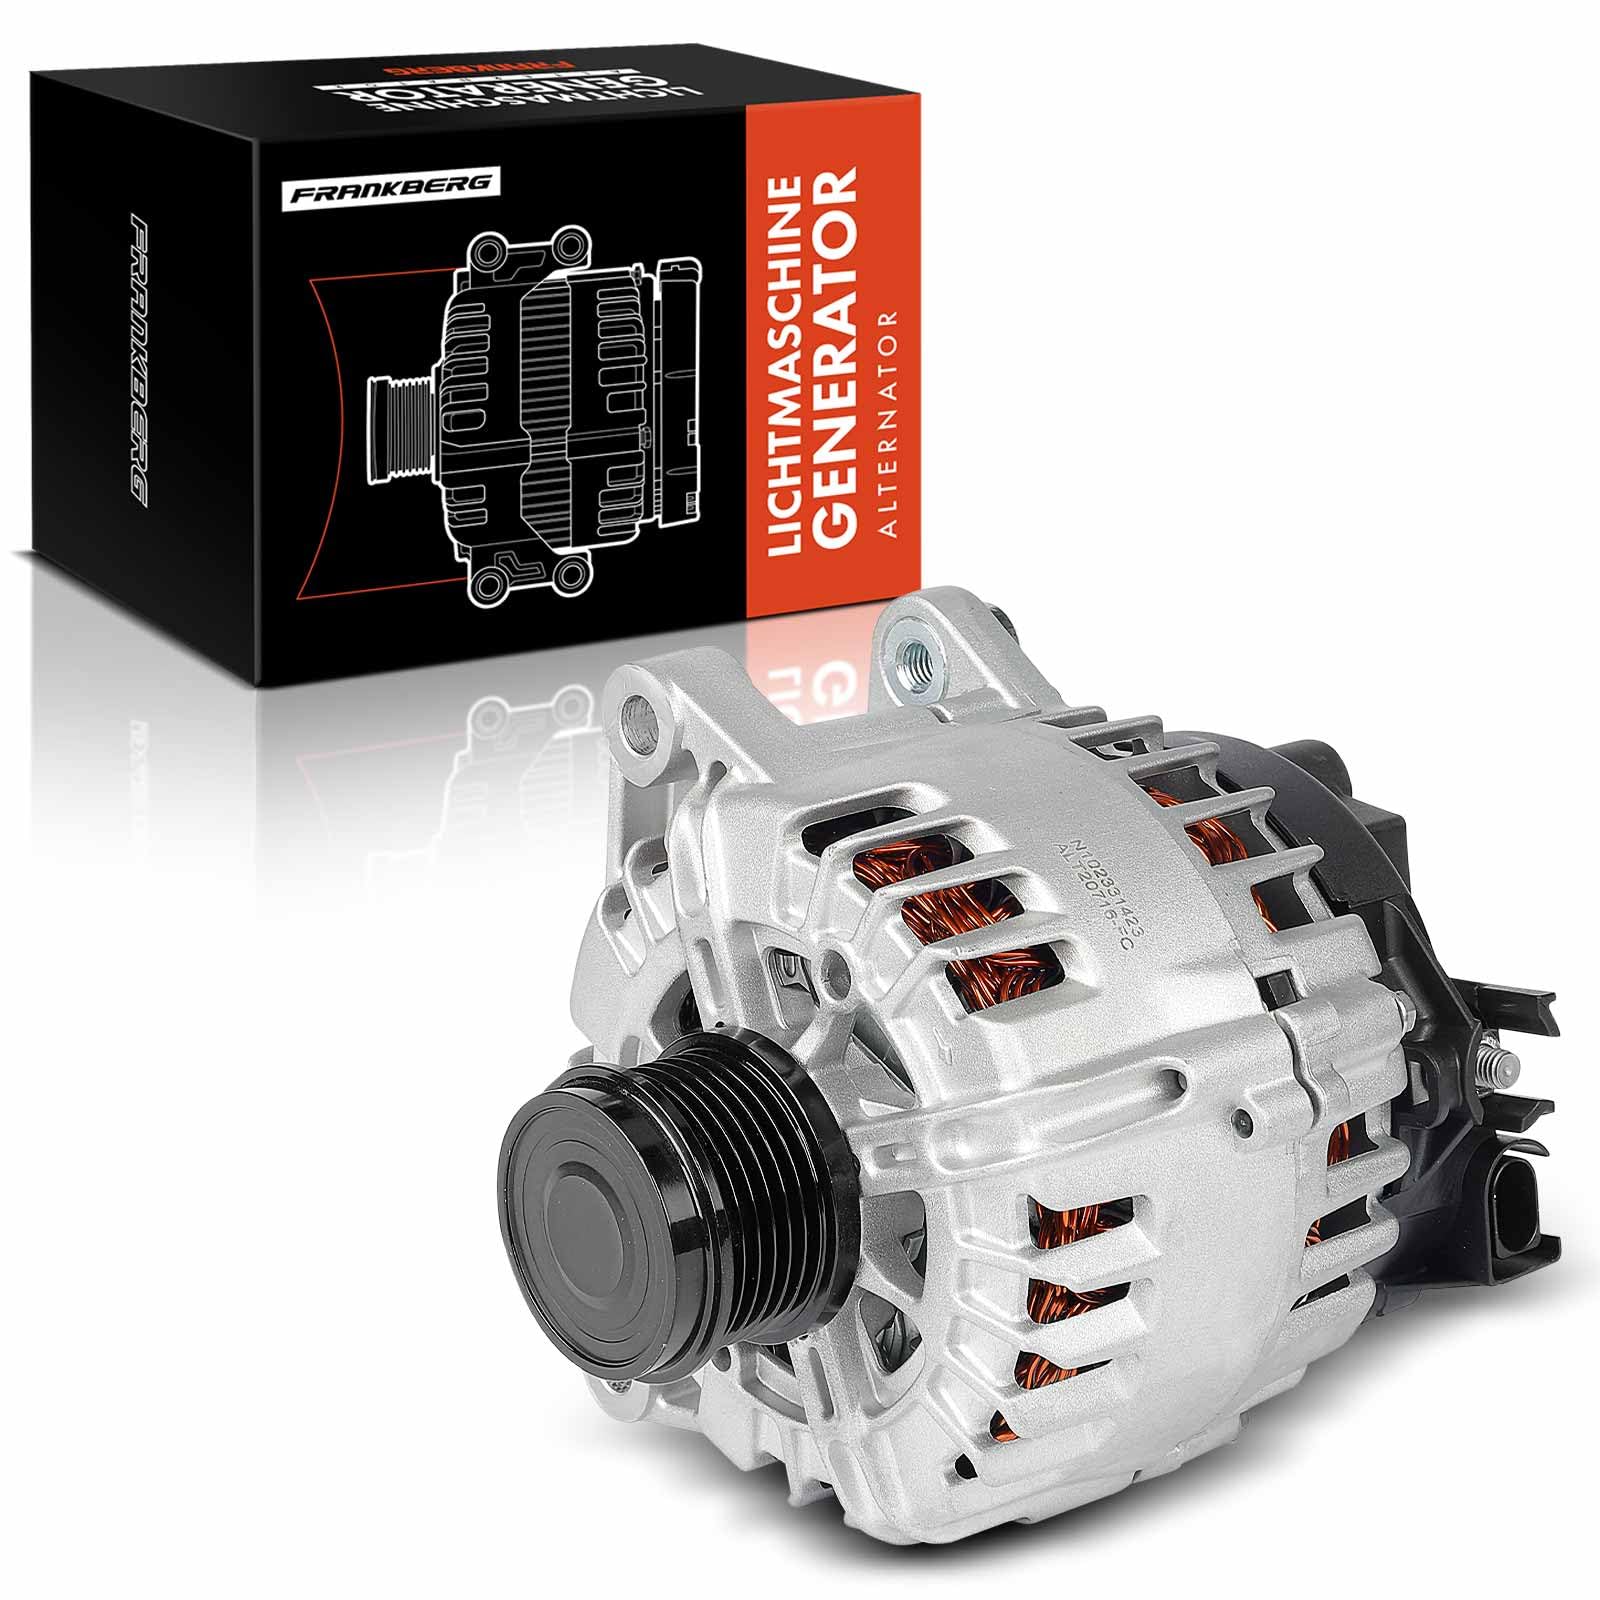 Frankberg Lichtmaschine Generator Kompatibel mit K.u.g.a II DM2 2.0L 2013-2016 C-Max II DXA/CB7 DXA/CEU 2.0L 2010-2015 S-Max WA6 2.0L 2010-2014 Mondeo IV BA7 2.0L 2010-2015 Replace# TG15C174 von Frankberg